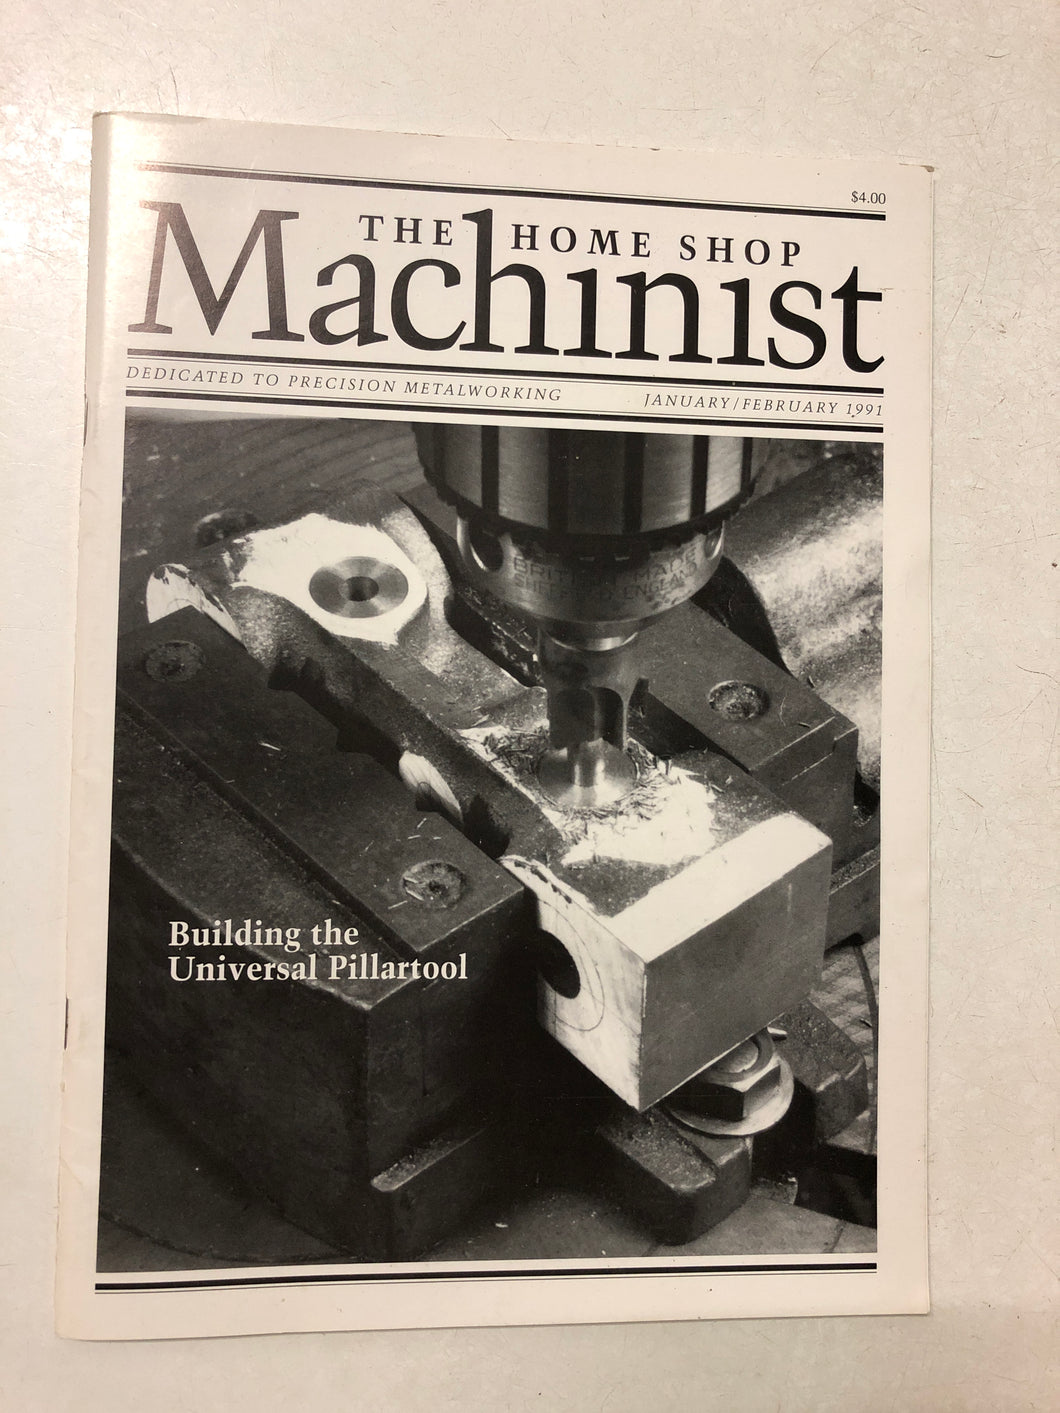 The Home Shop Machinist January/February 1991 - Slick Cat Books 